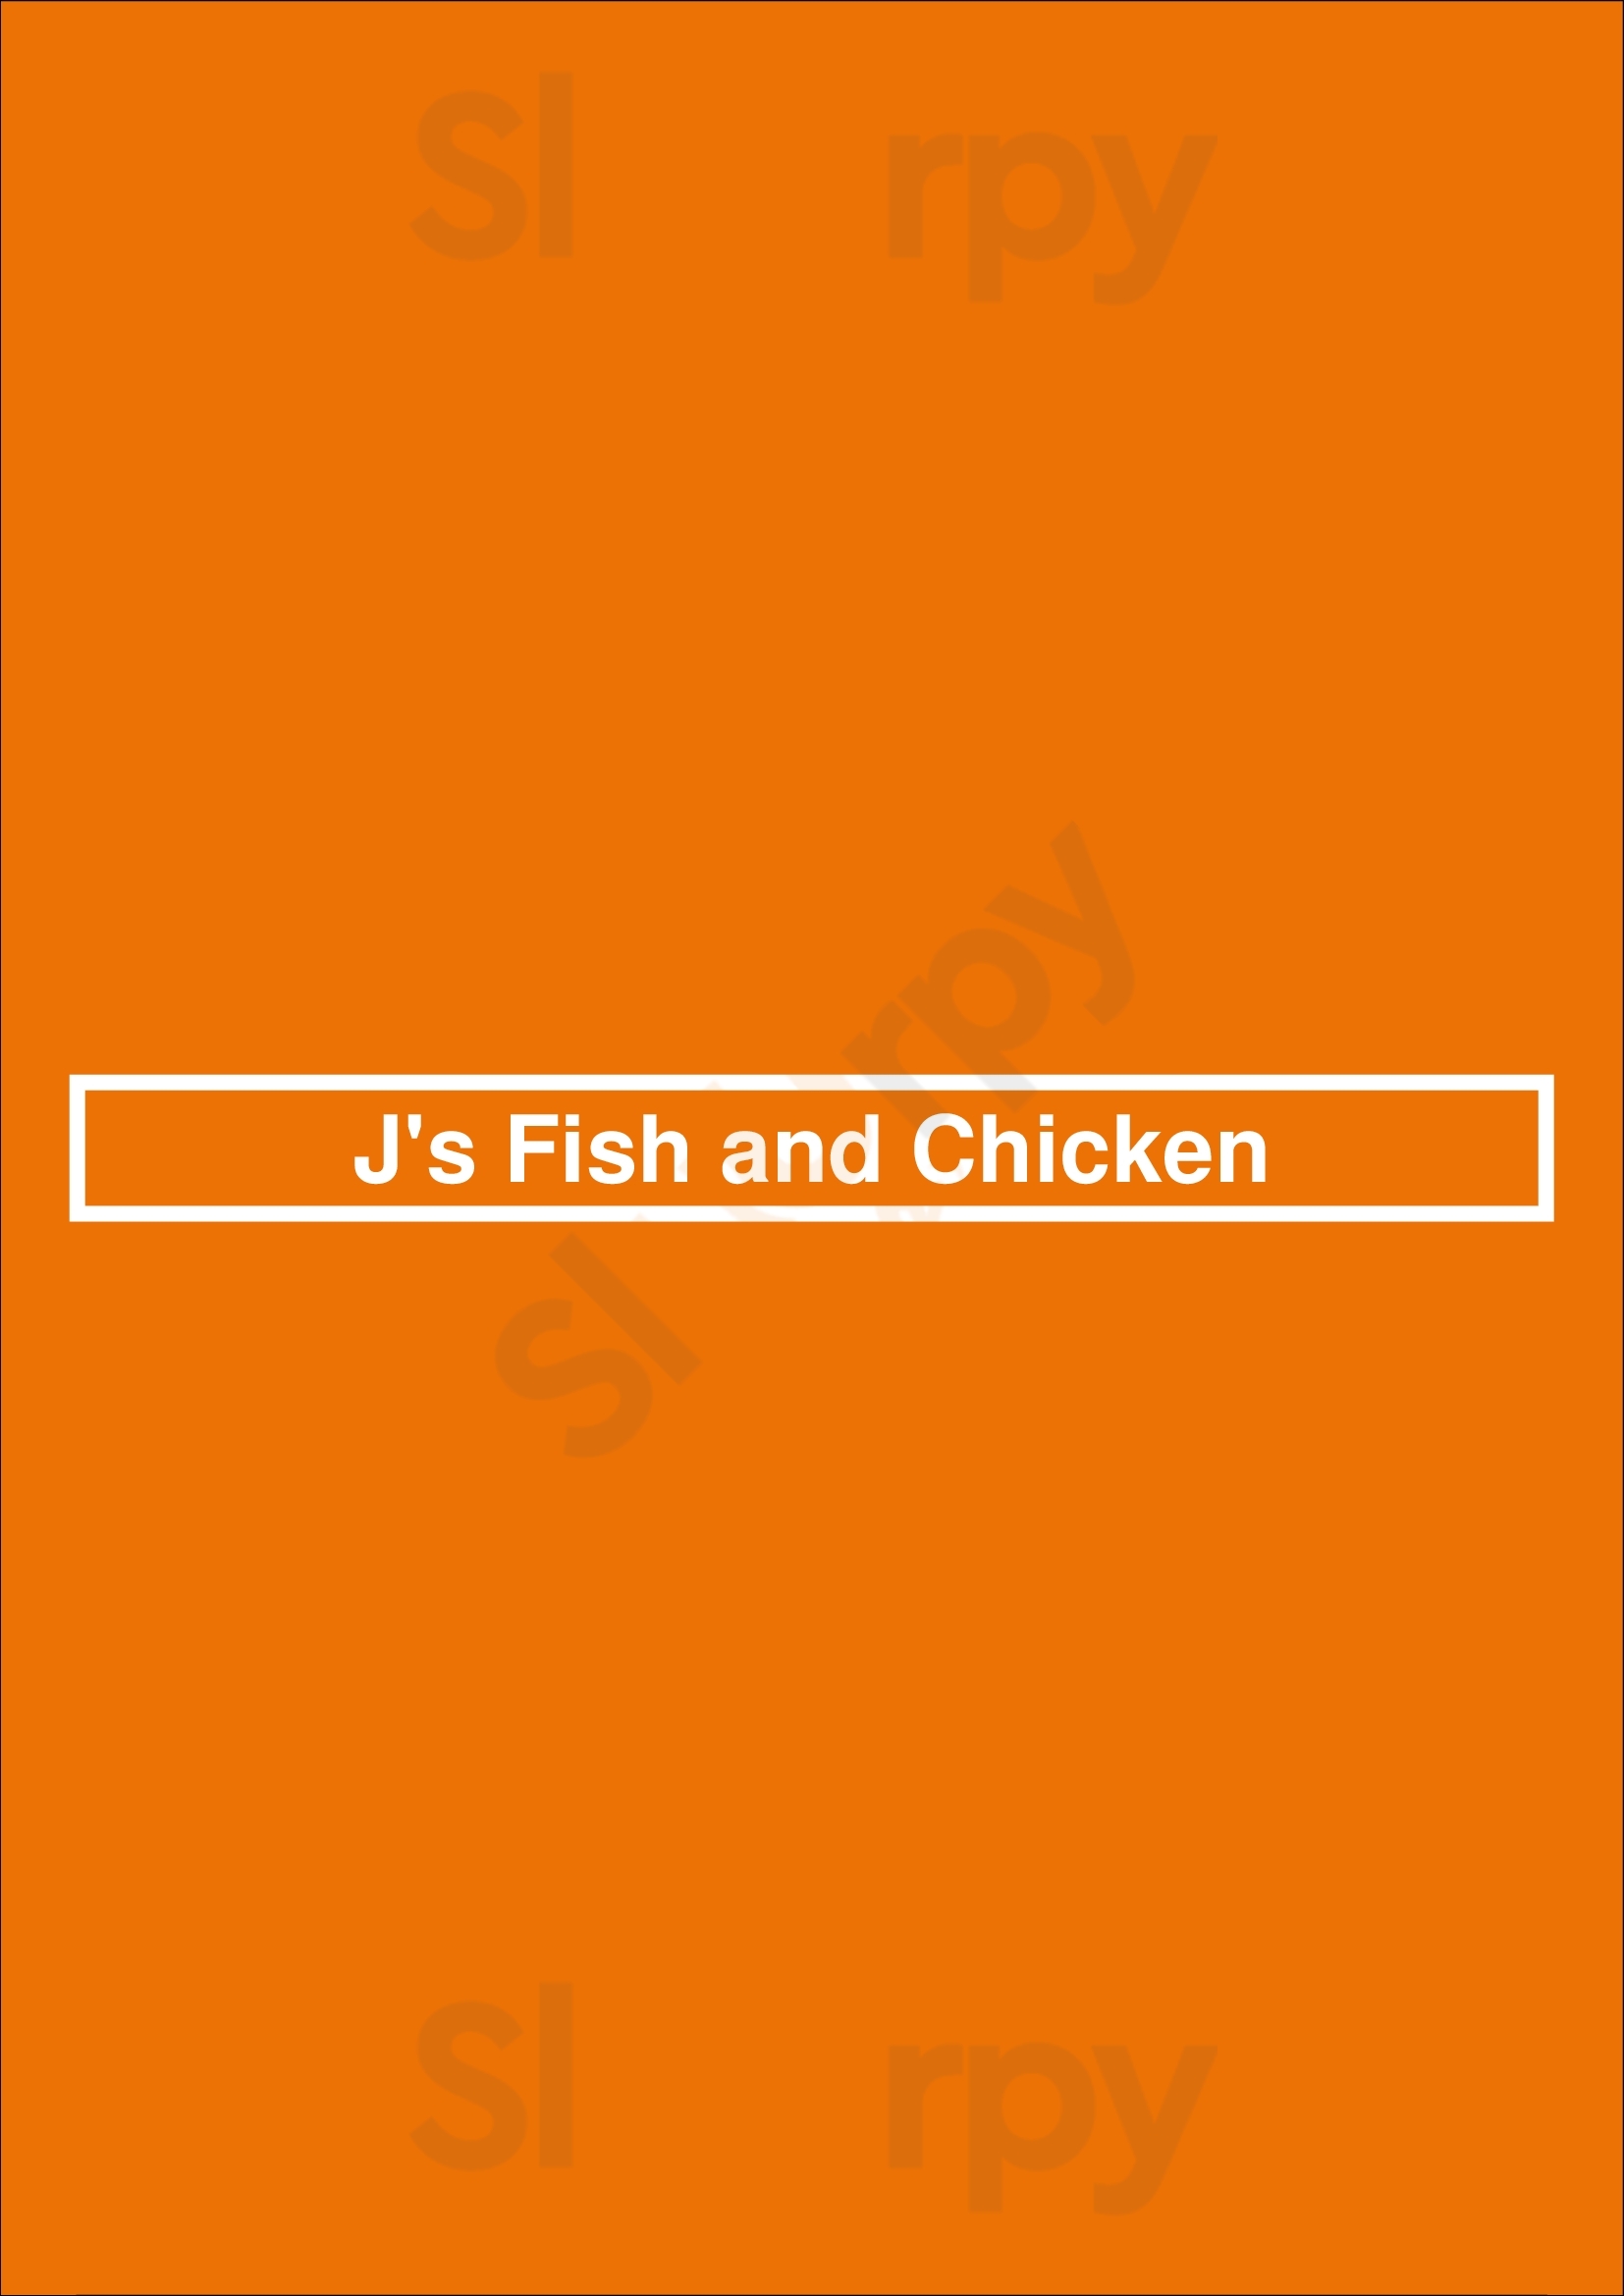 J's Fish And Chicken Kansas City Menu - 1